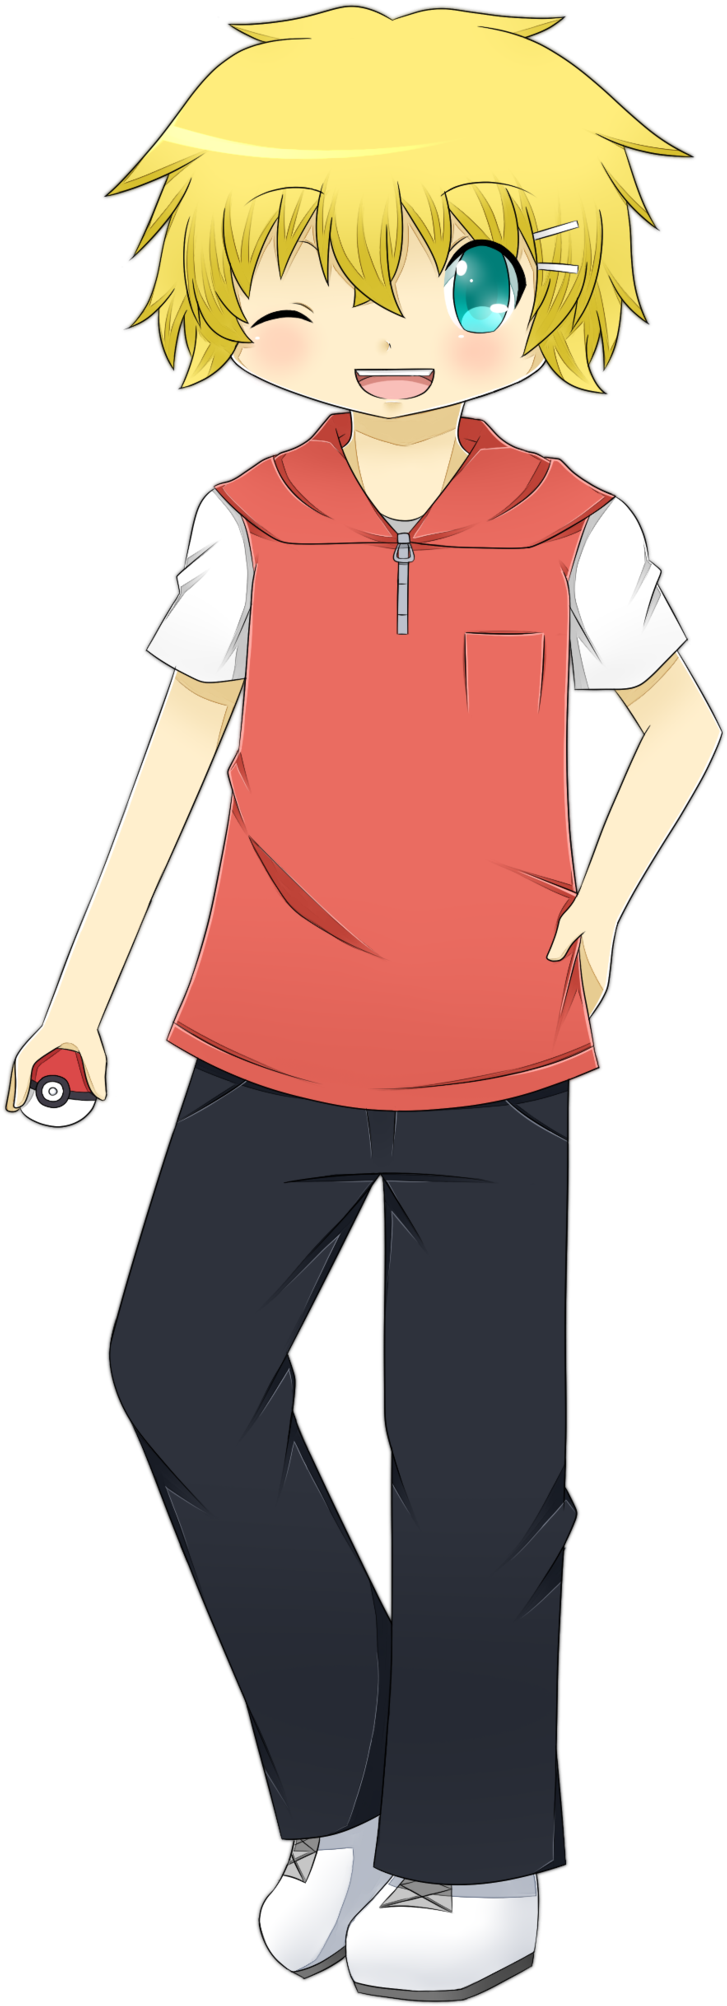 Pokemon Trainer Oc - Costume Hat (900x2115)